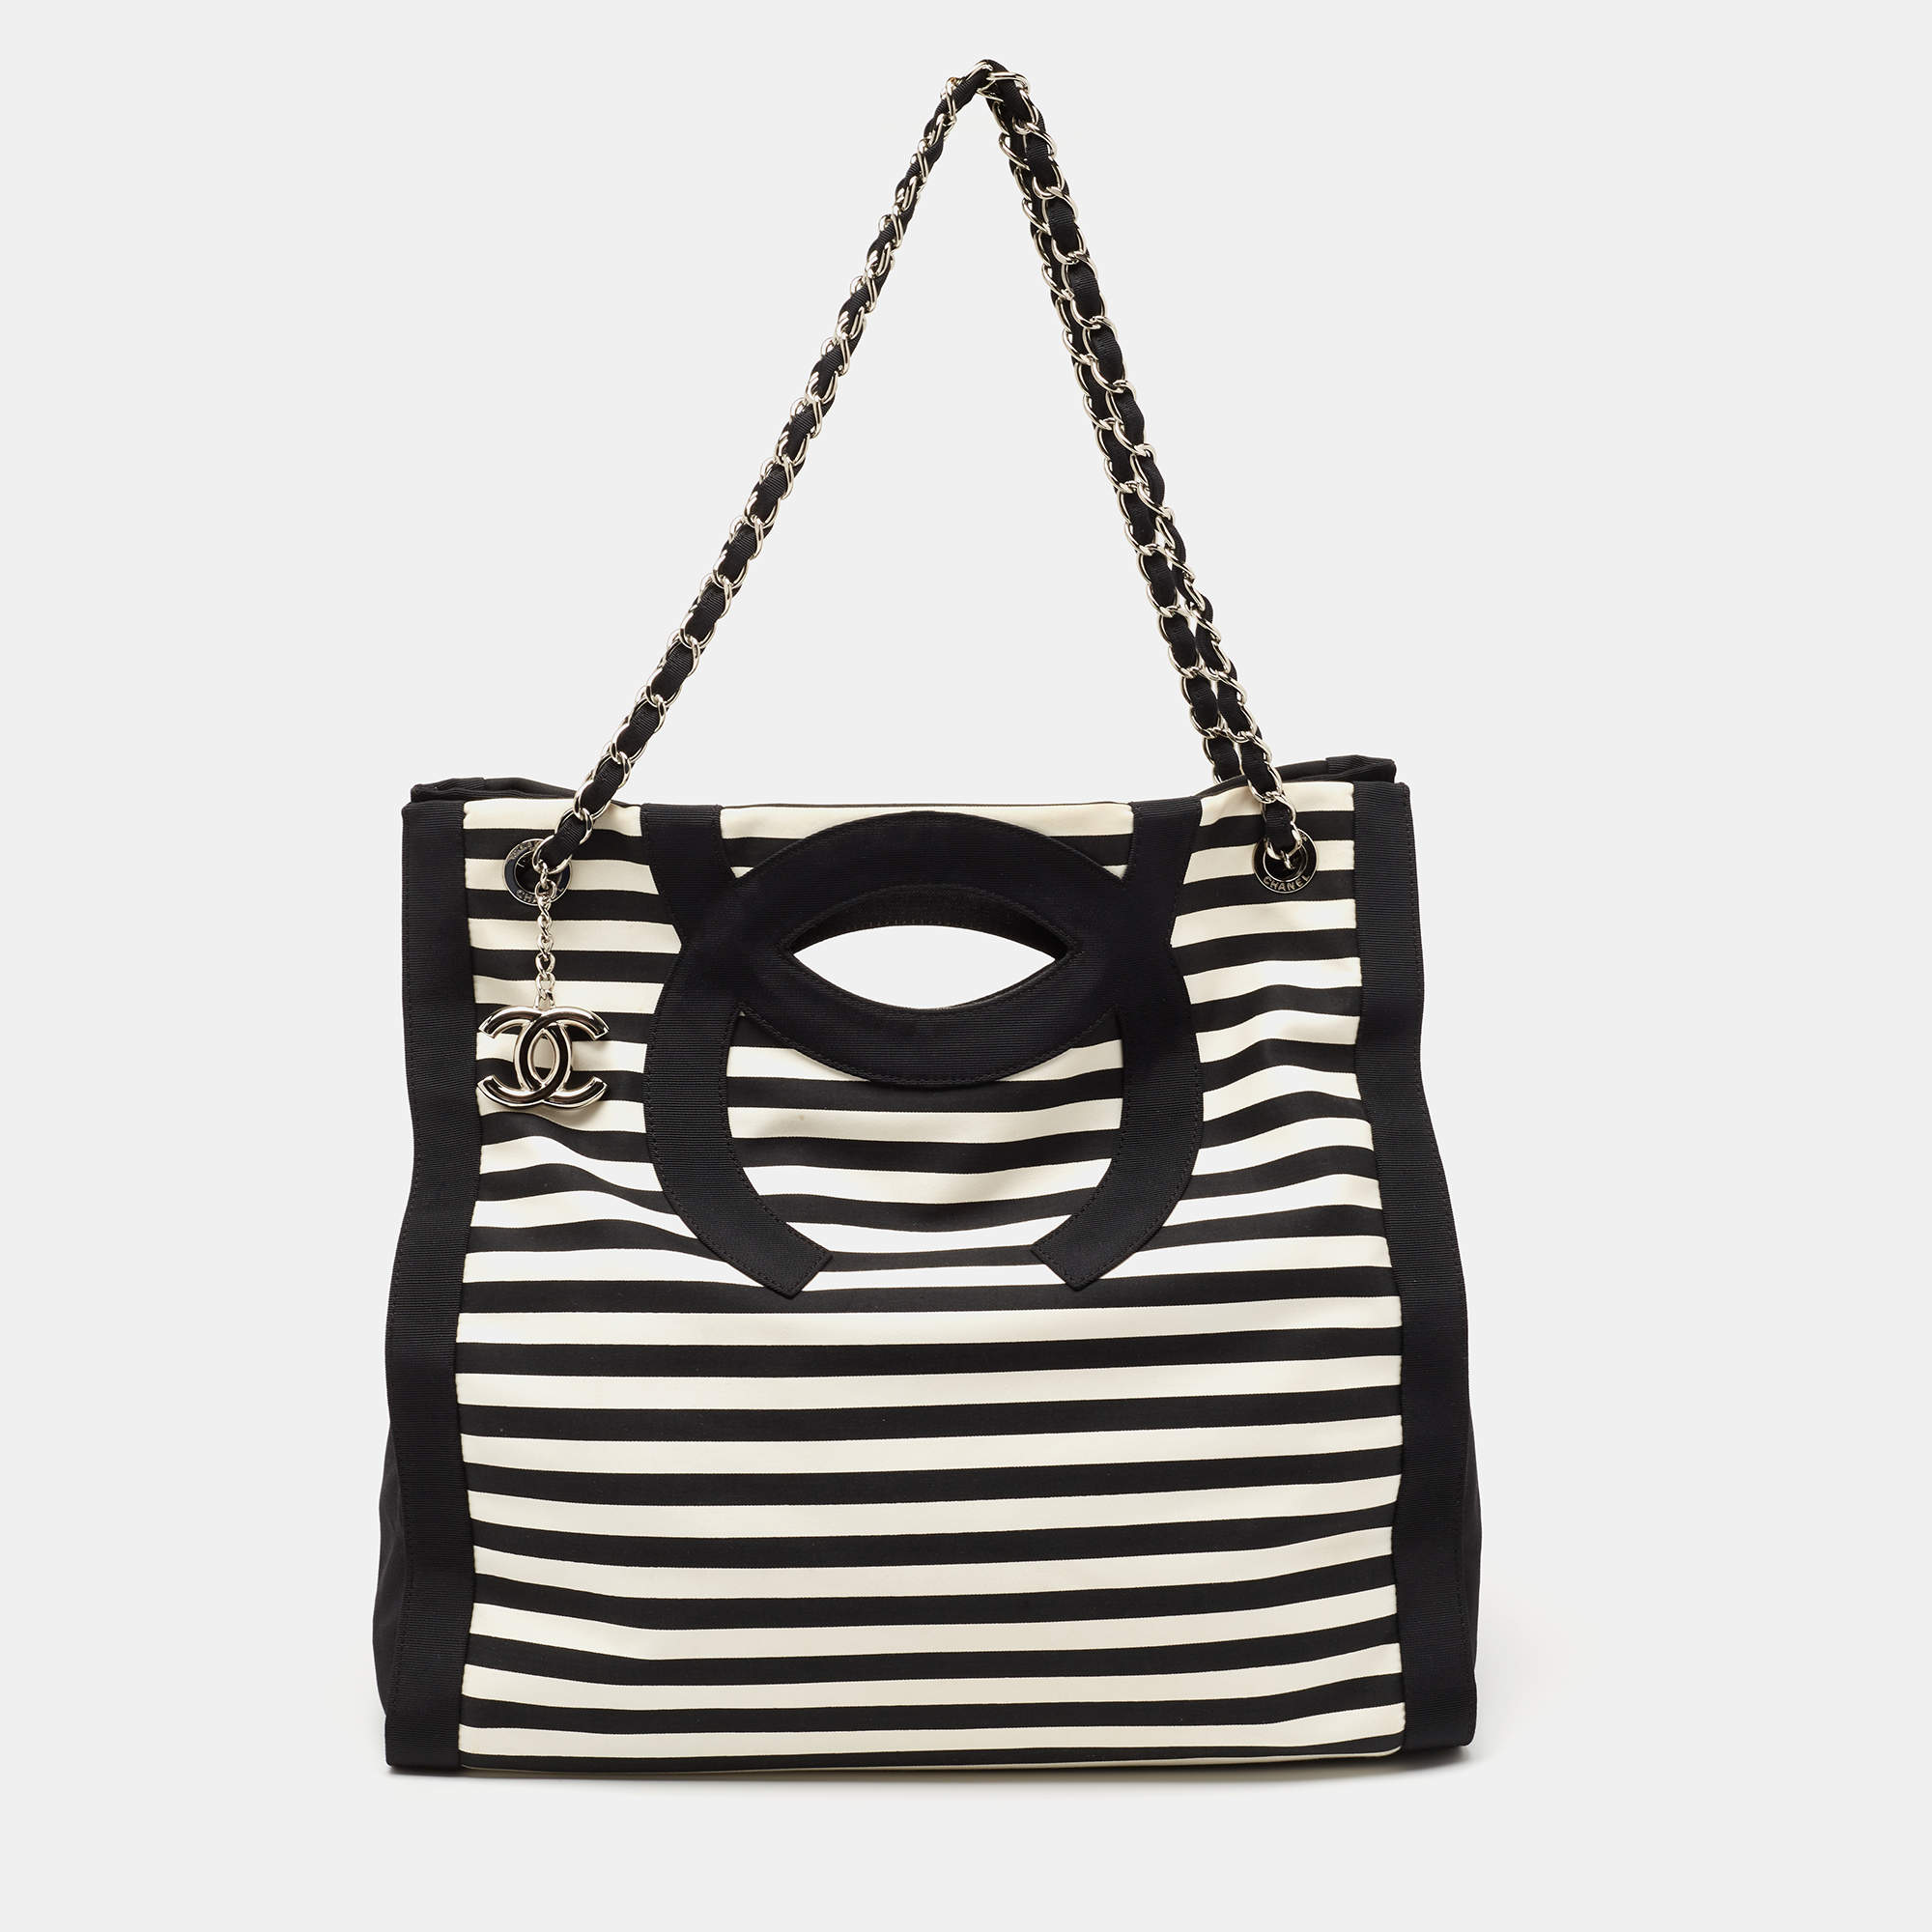 Chanel Vintage Chanel Jumbo XL Black x White Nylon Shopper Tote Bag